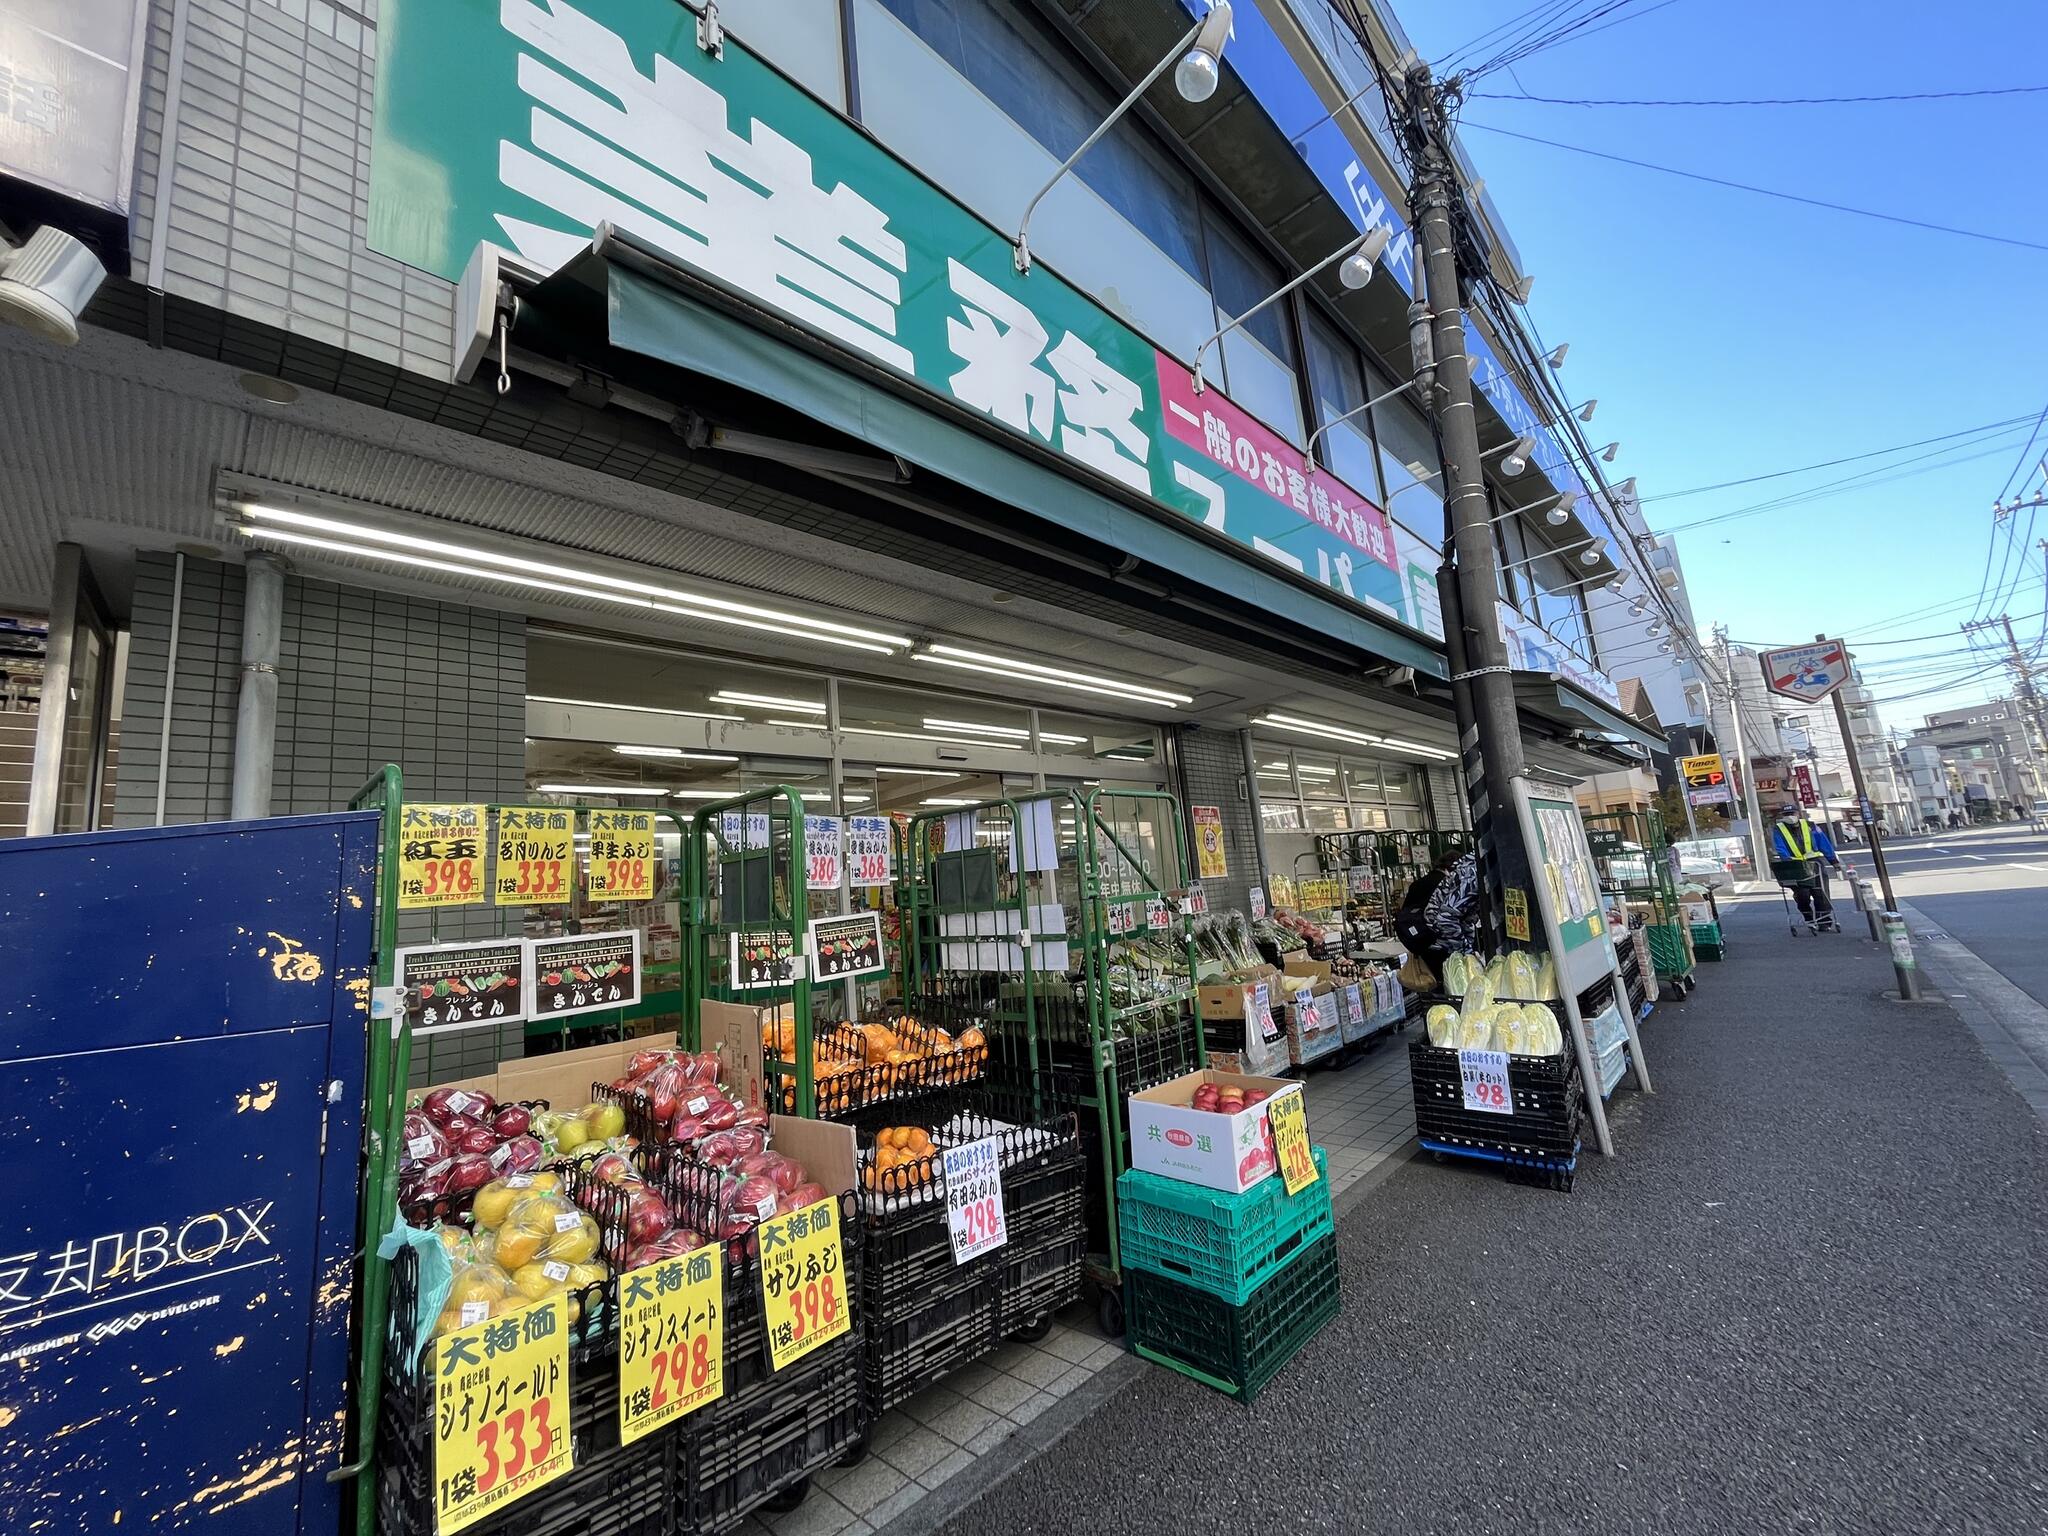 業務スーパー 六角橋店の代表写真5